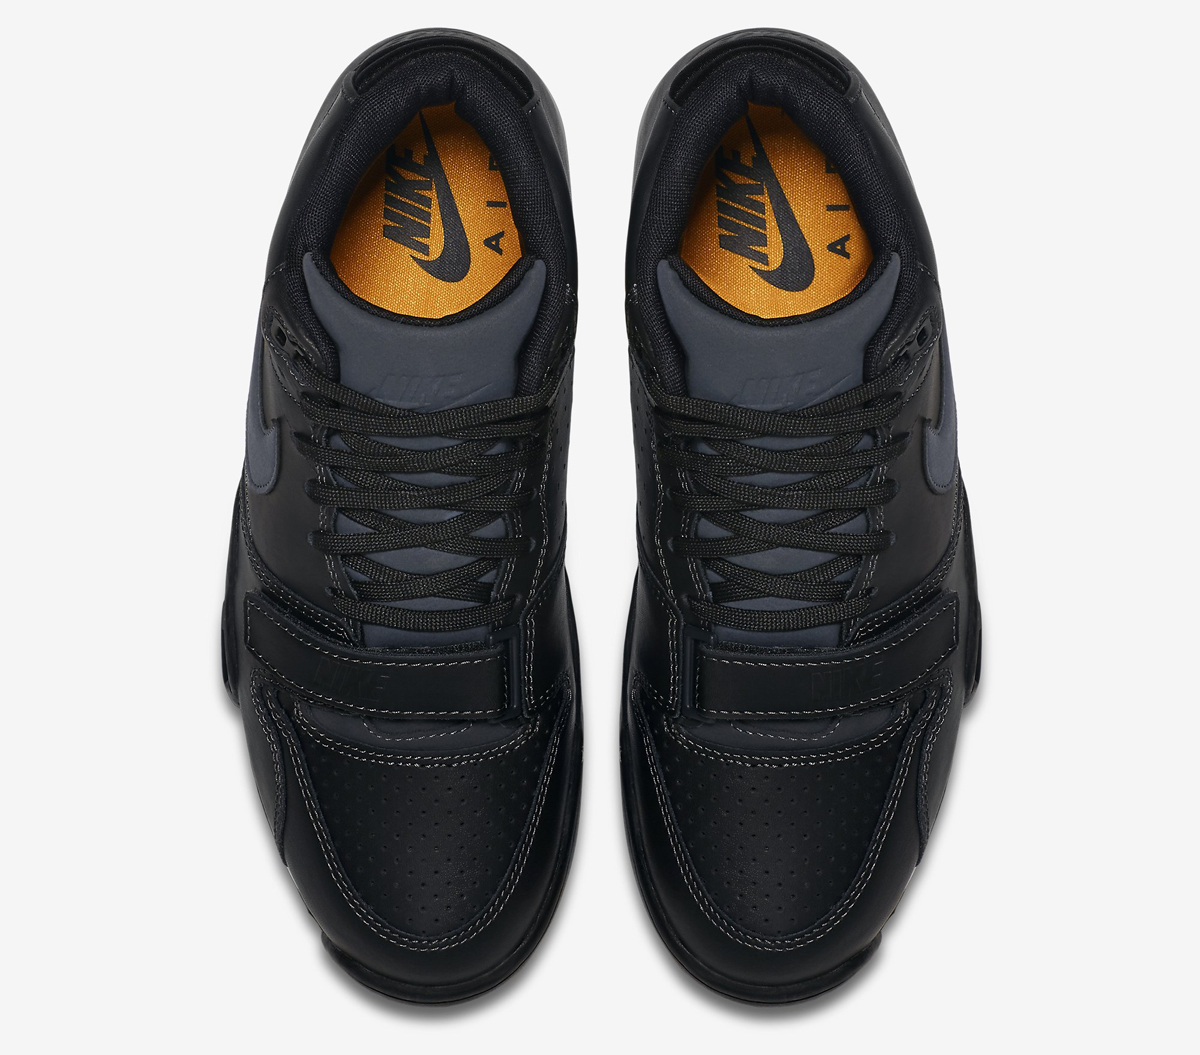 Nike Air Trainer 1 Mid Black Leather - Sneaker Bar Detroit